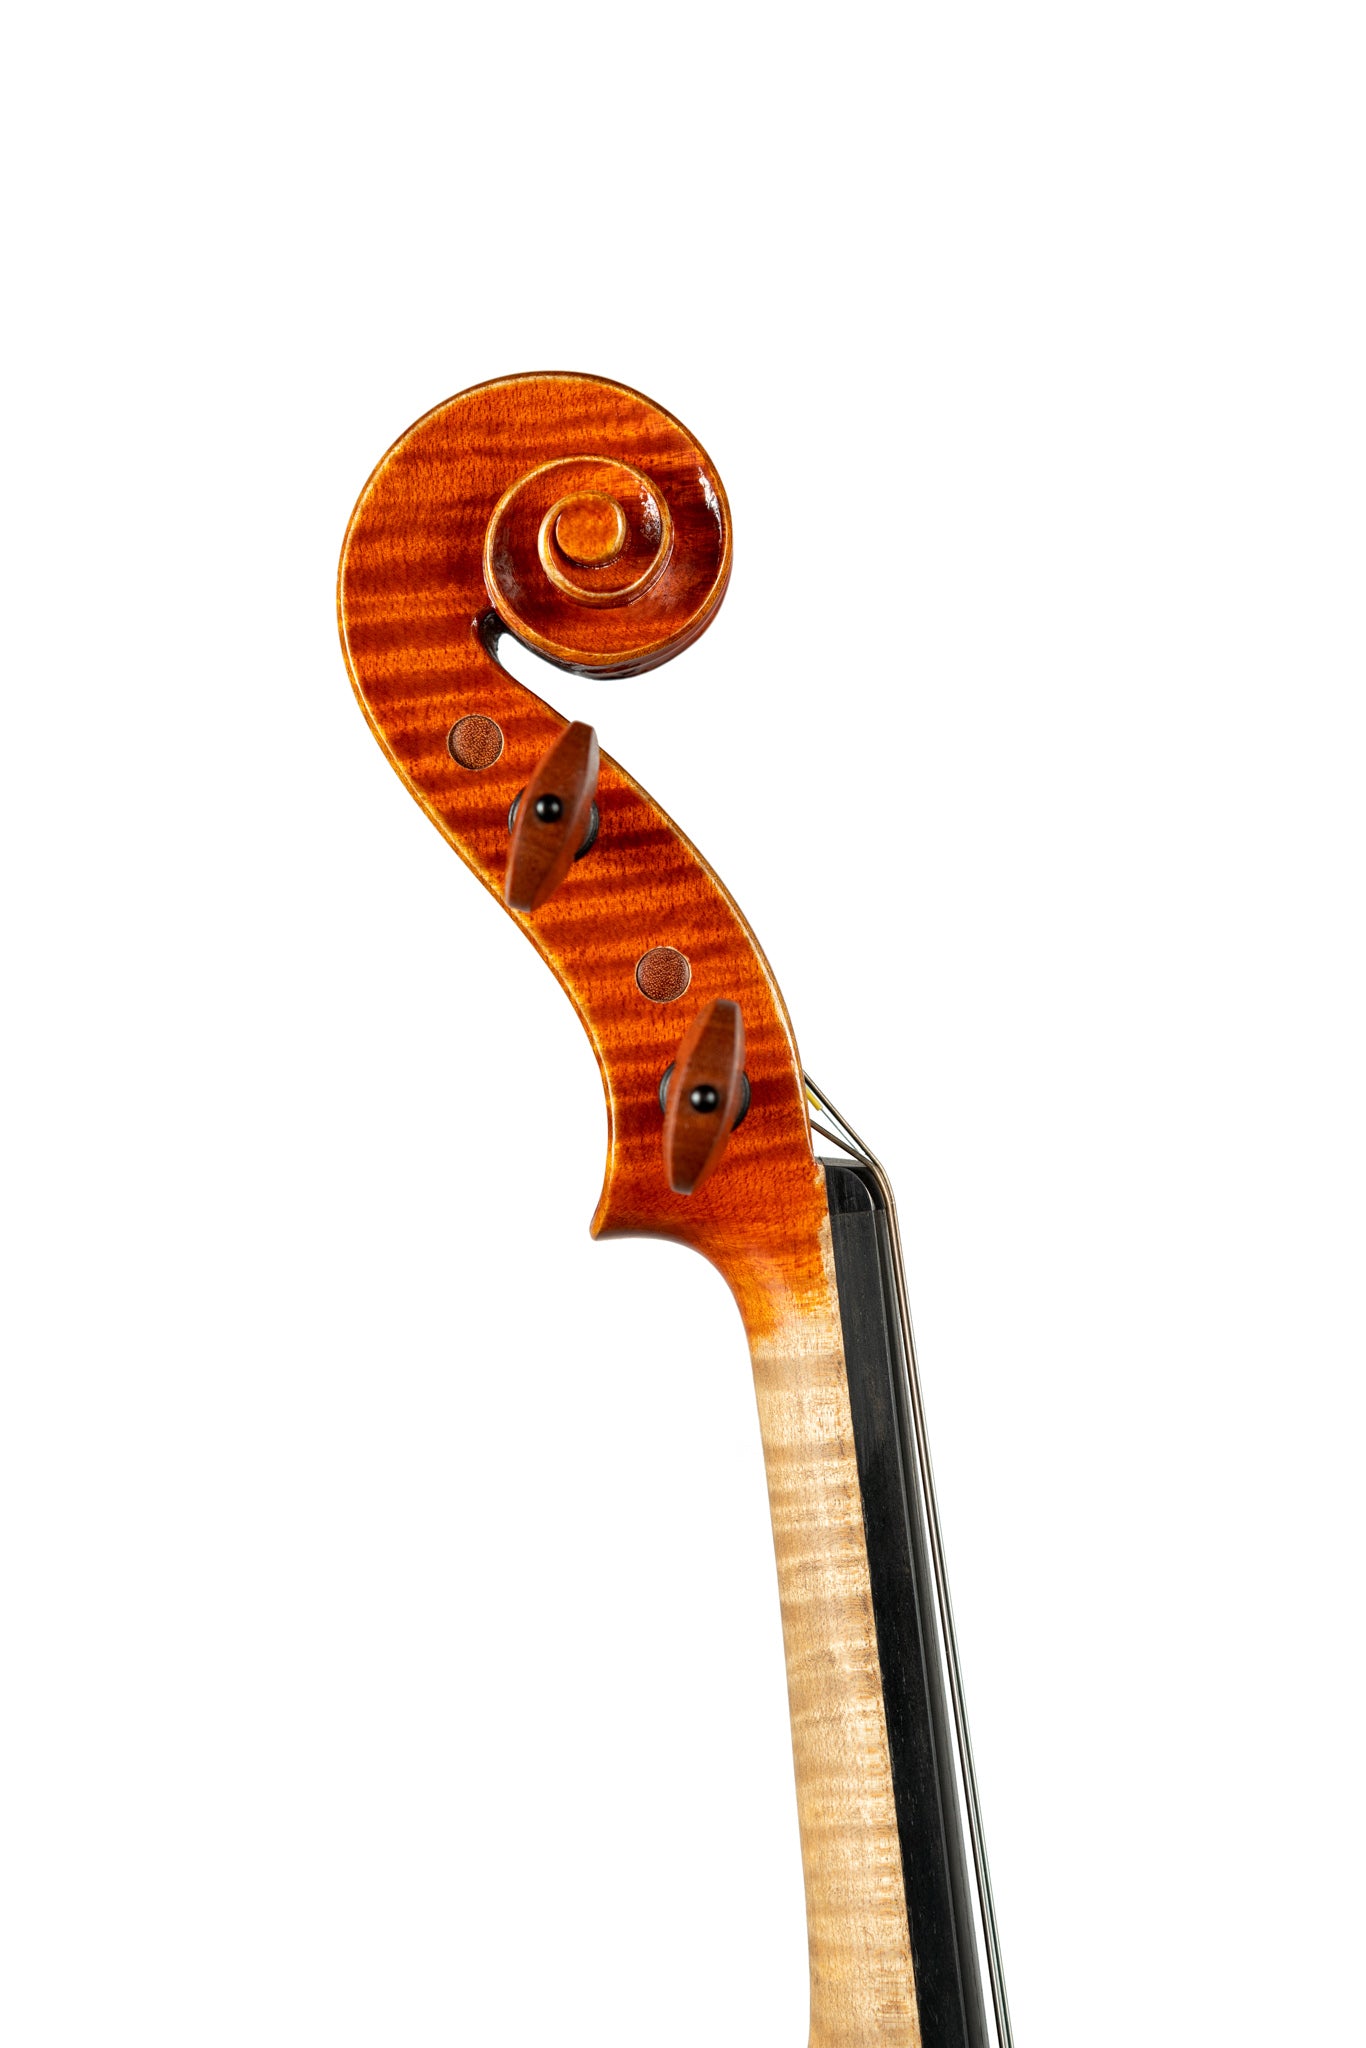 BL-700 Violin